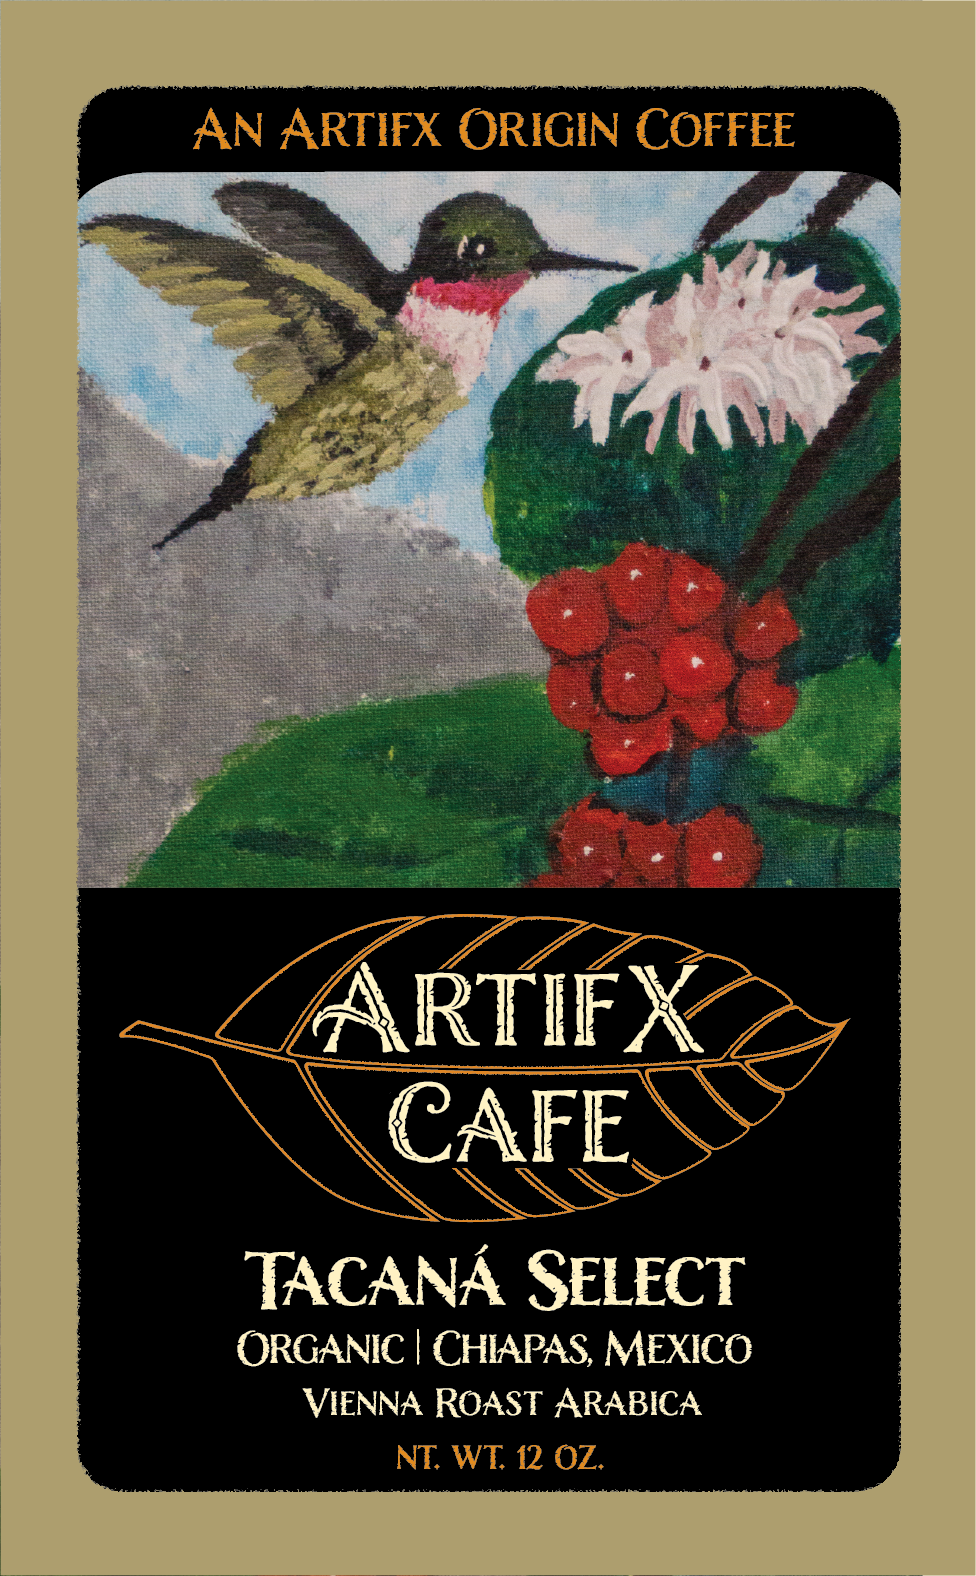 Artifx Cafe Artisanal Coffee Sampler Gift Box